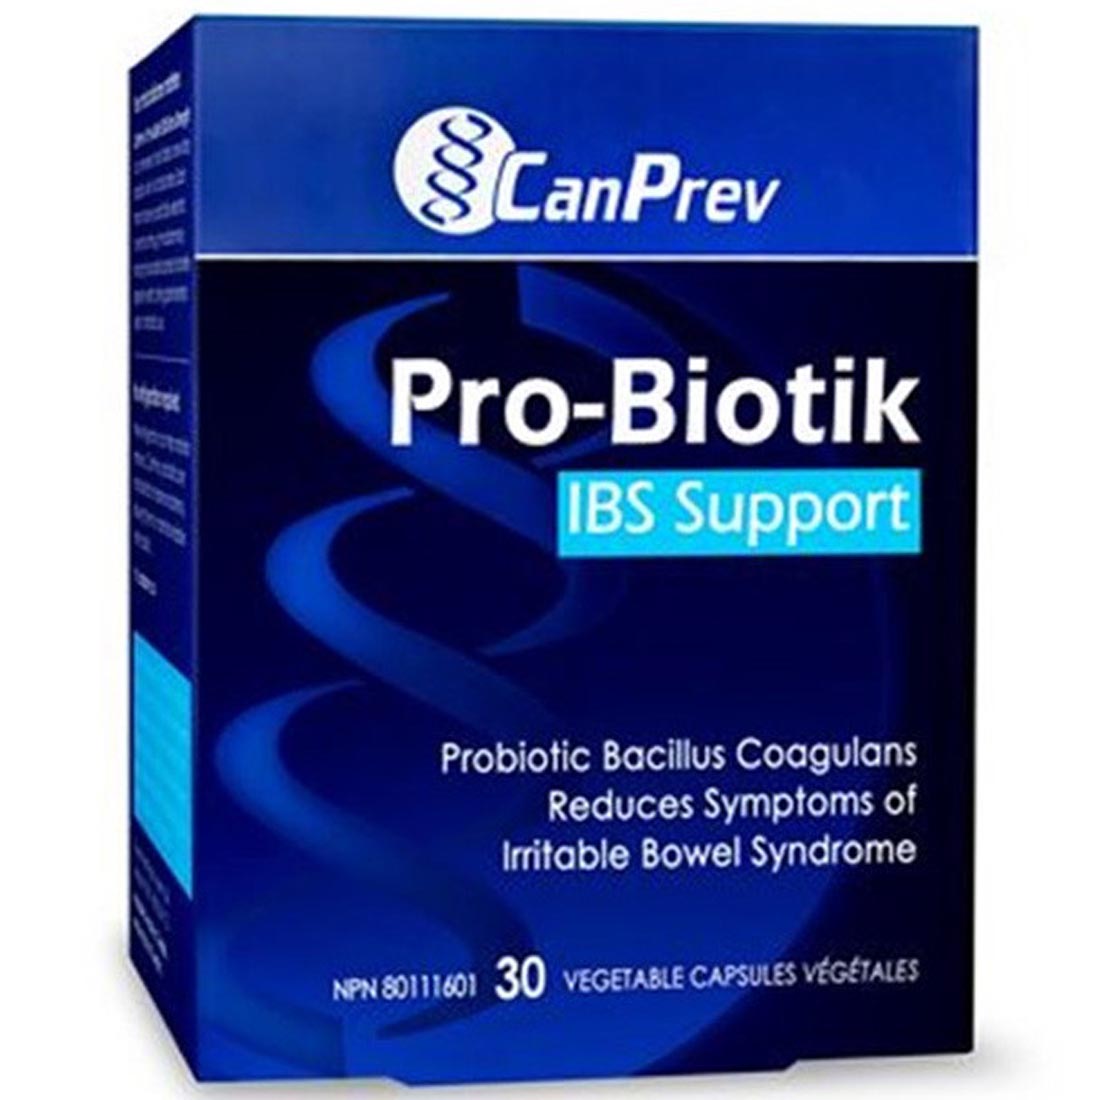 CanPrev Pro-Biotik, Probiotic For IBS Support, 30 Vegetable Capsules